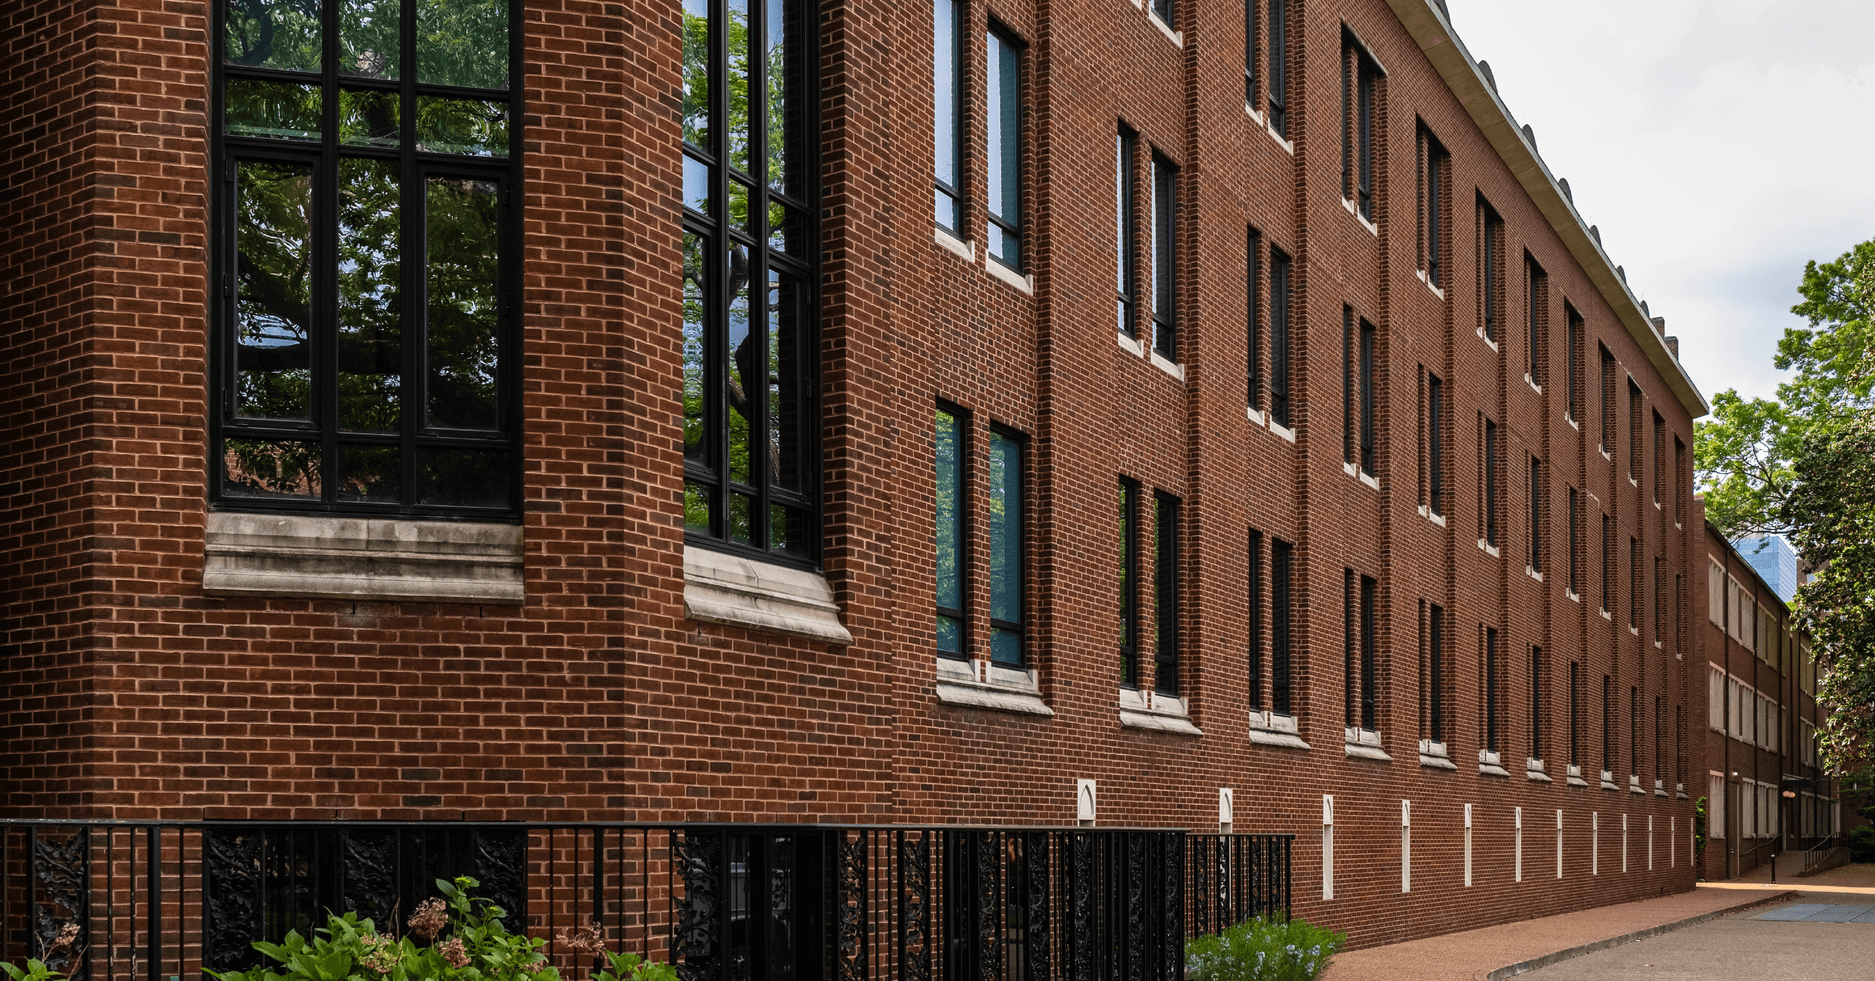 The brick facade of an educational building.